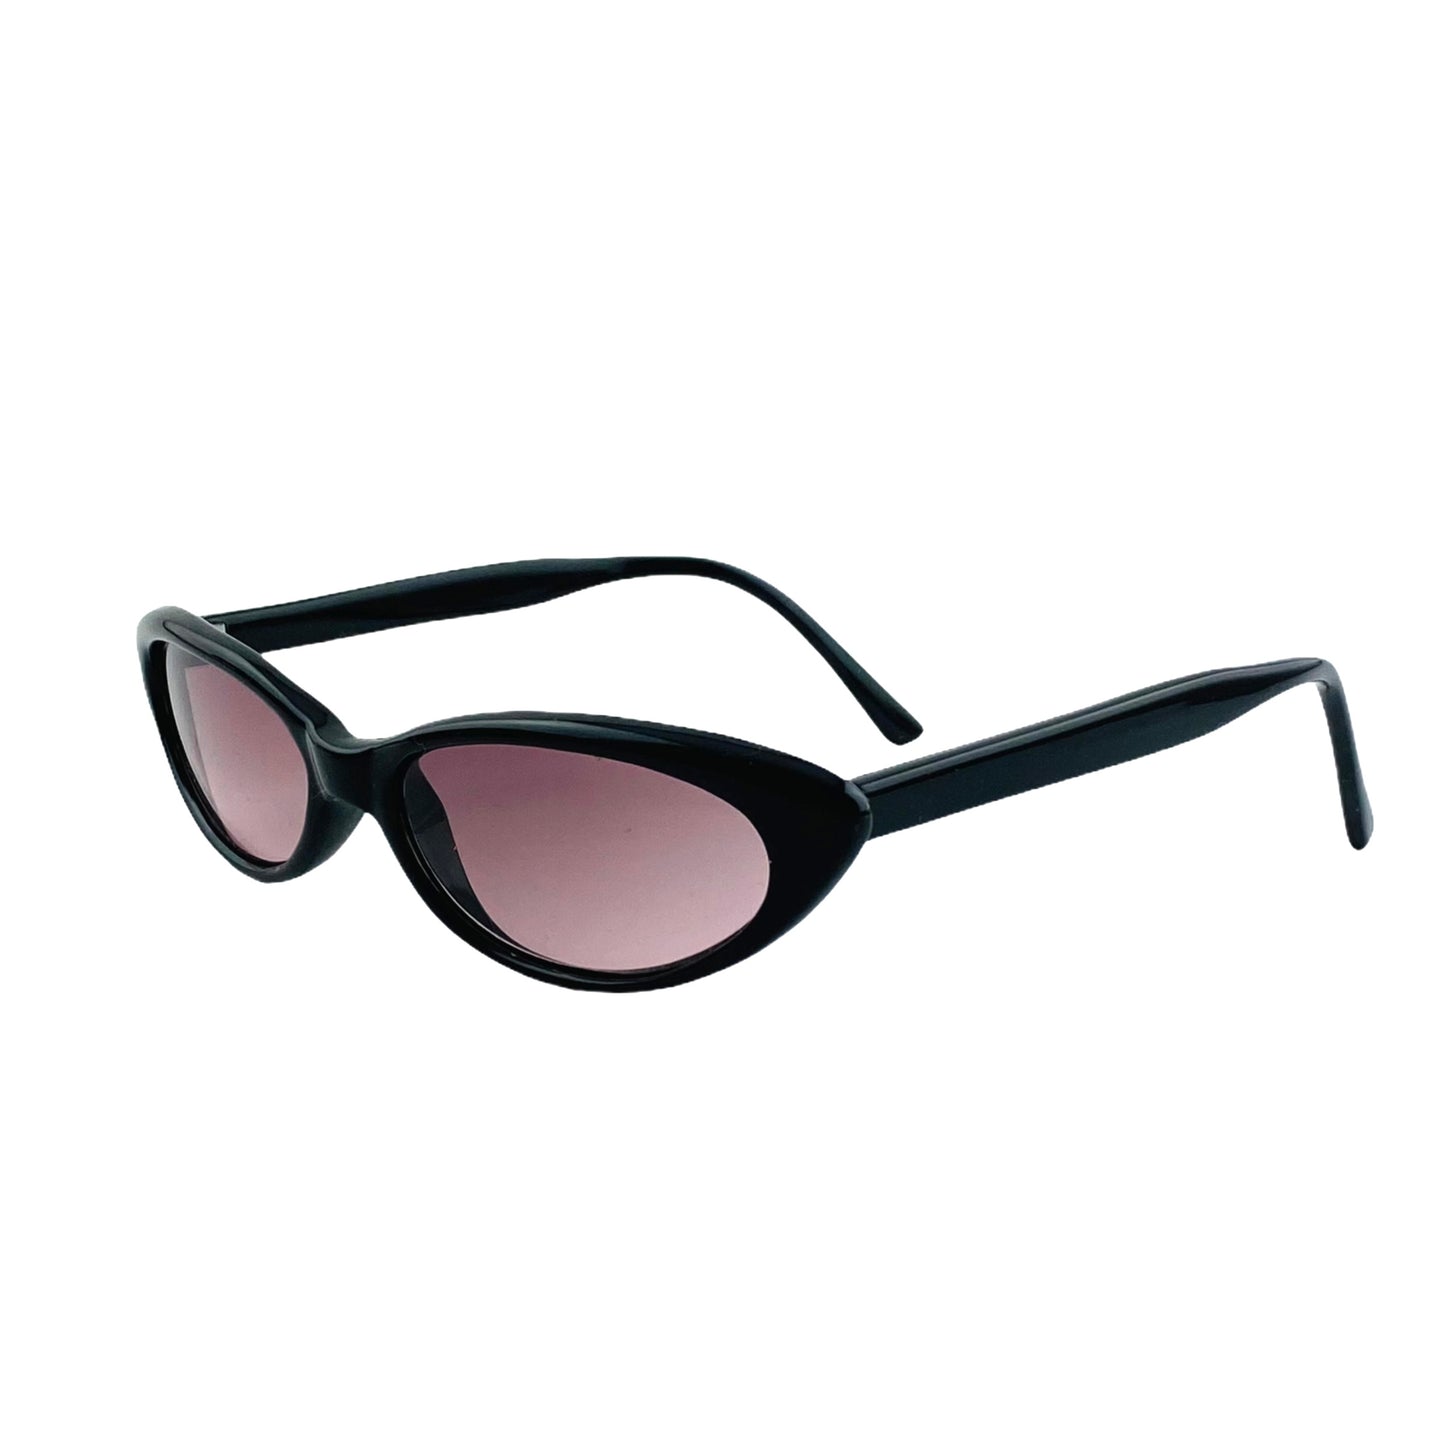 vintage 1990s black oval sunglasses with purple lenses